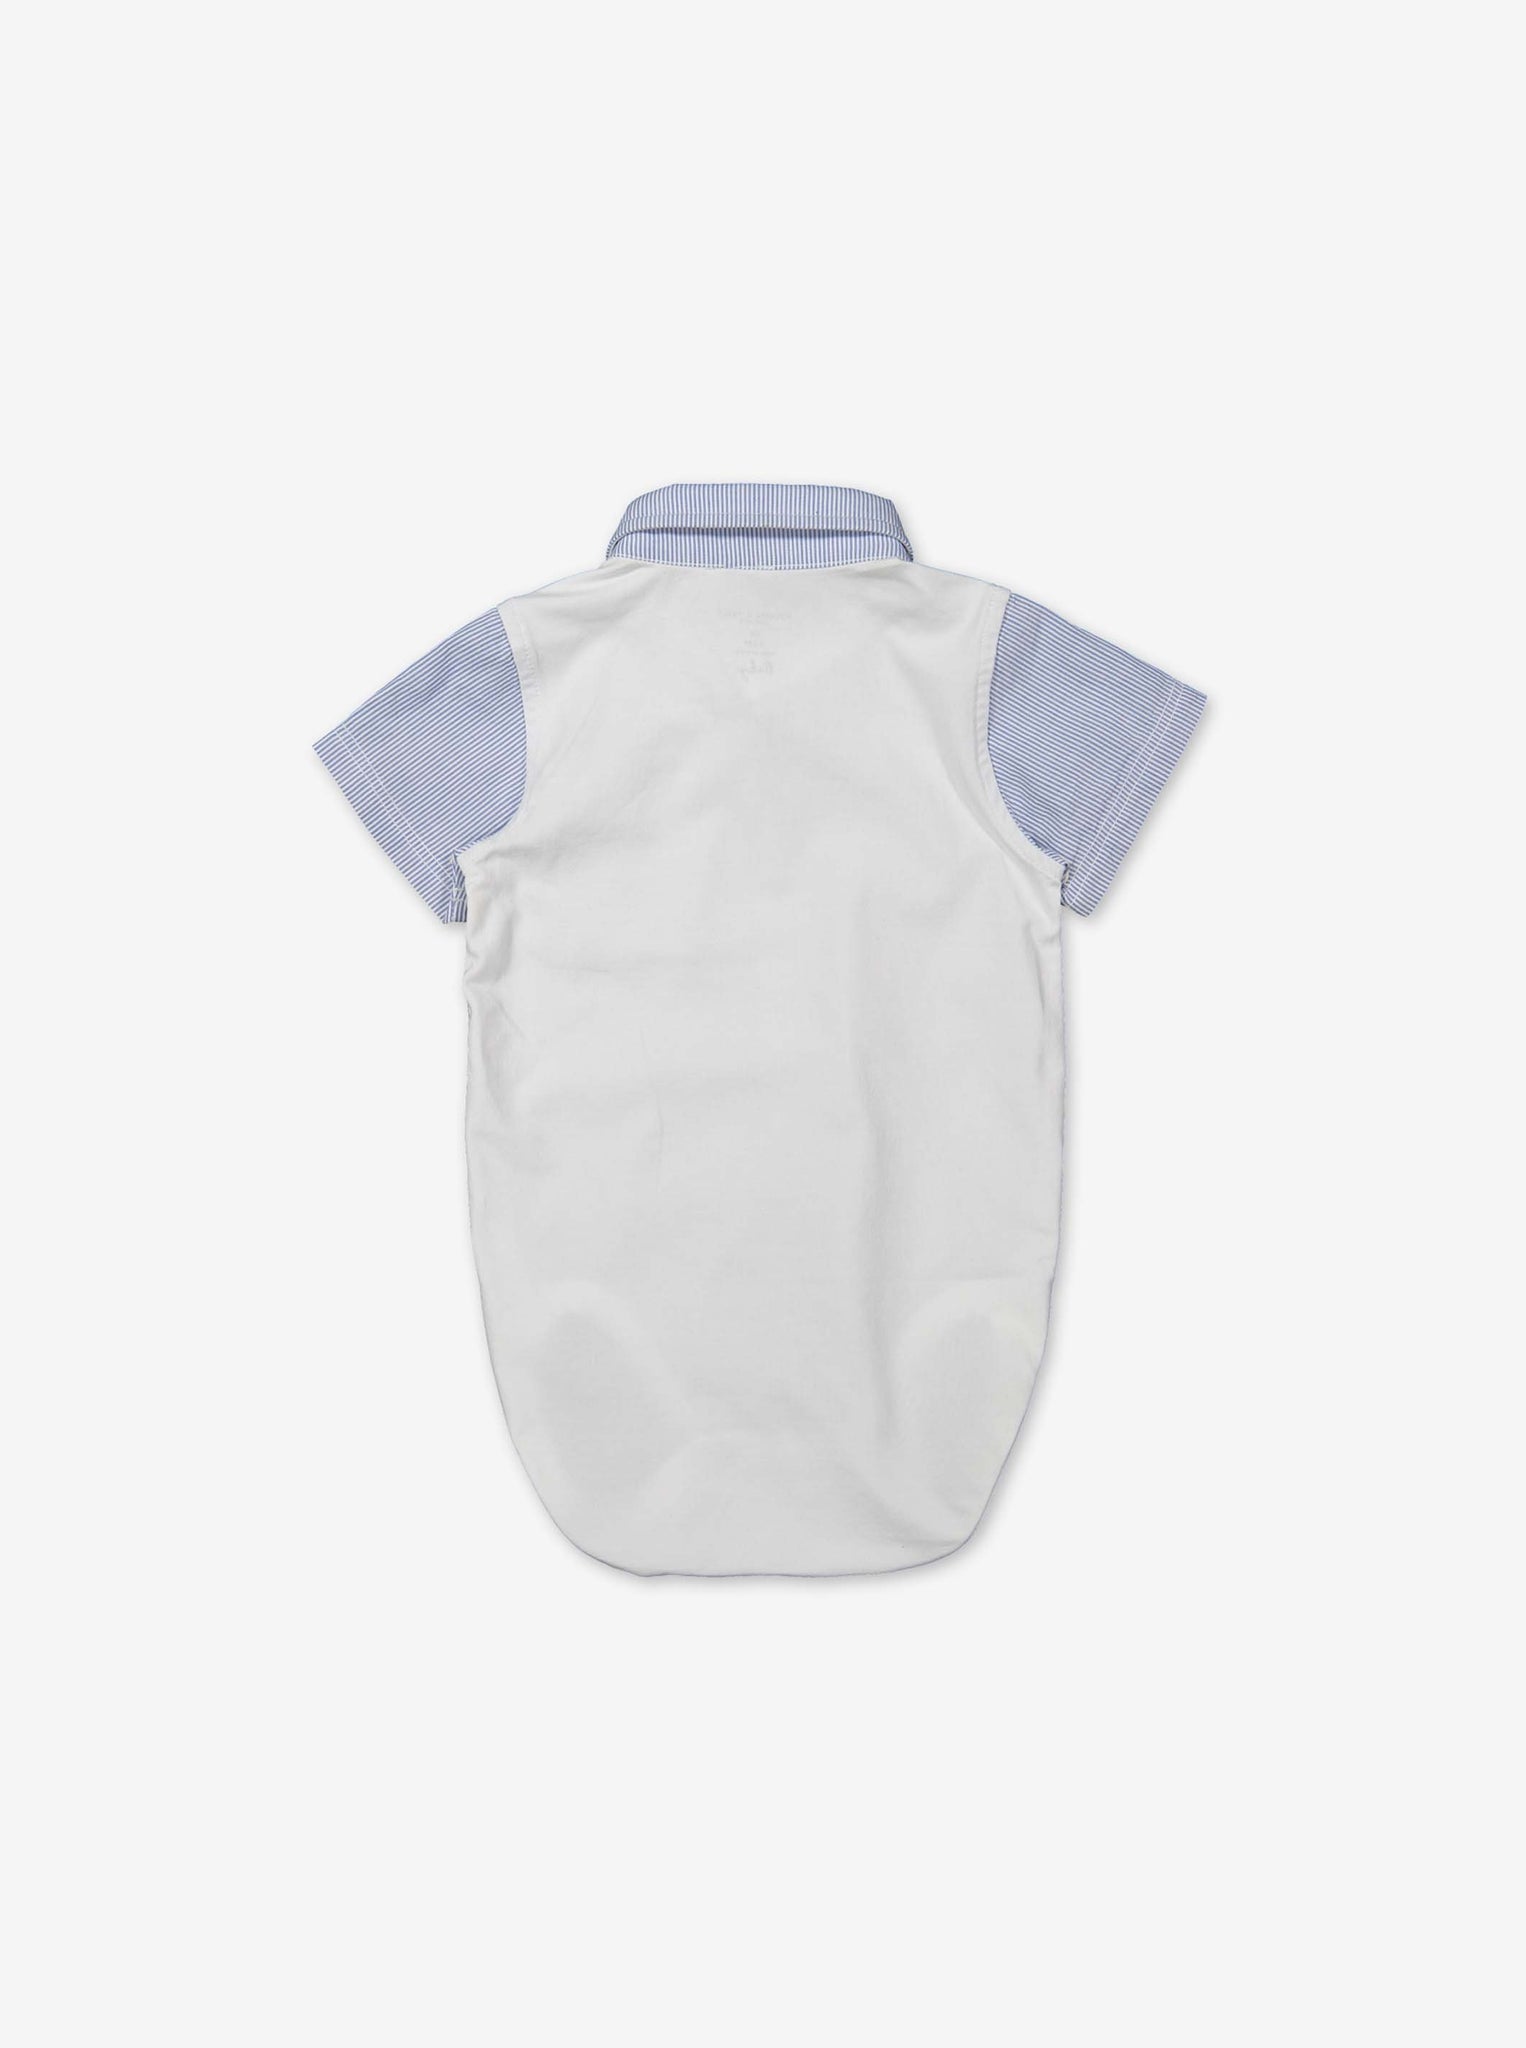 Striped Baby Shirt Bodysuit